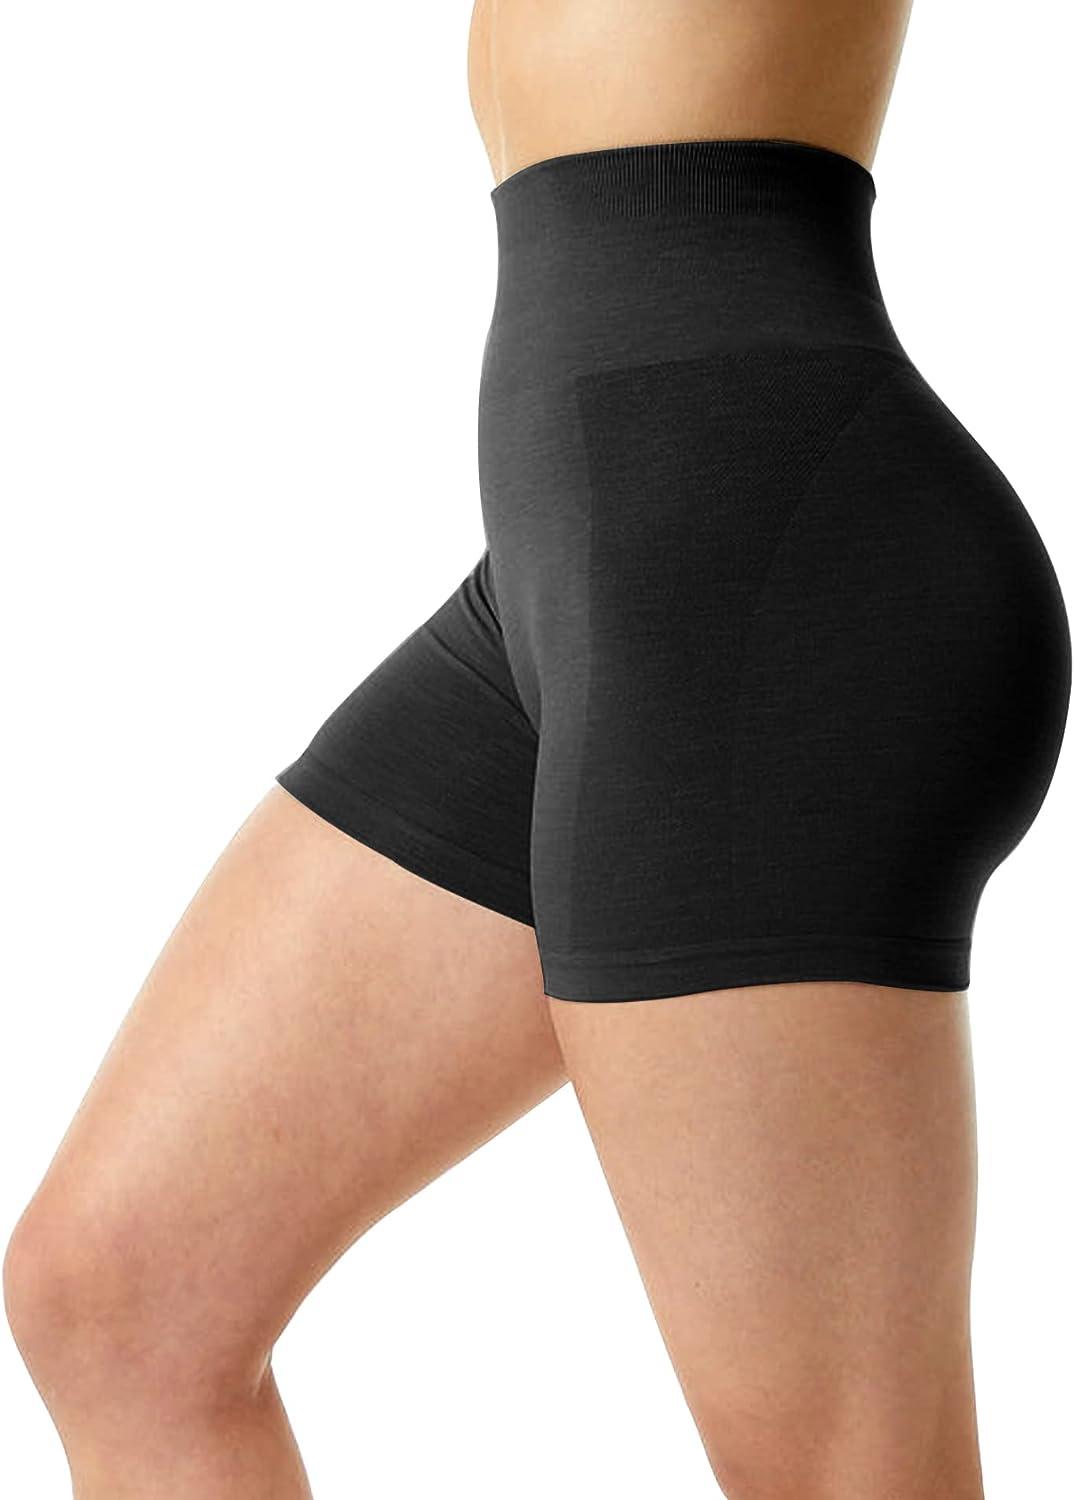 Booty Shorts for Women Butt Lifting Shorts Gym Shorts Women Gym